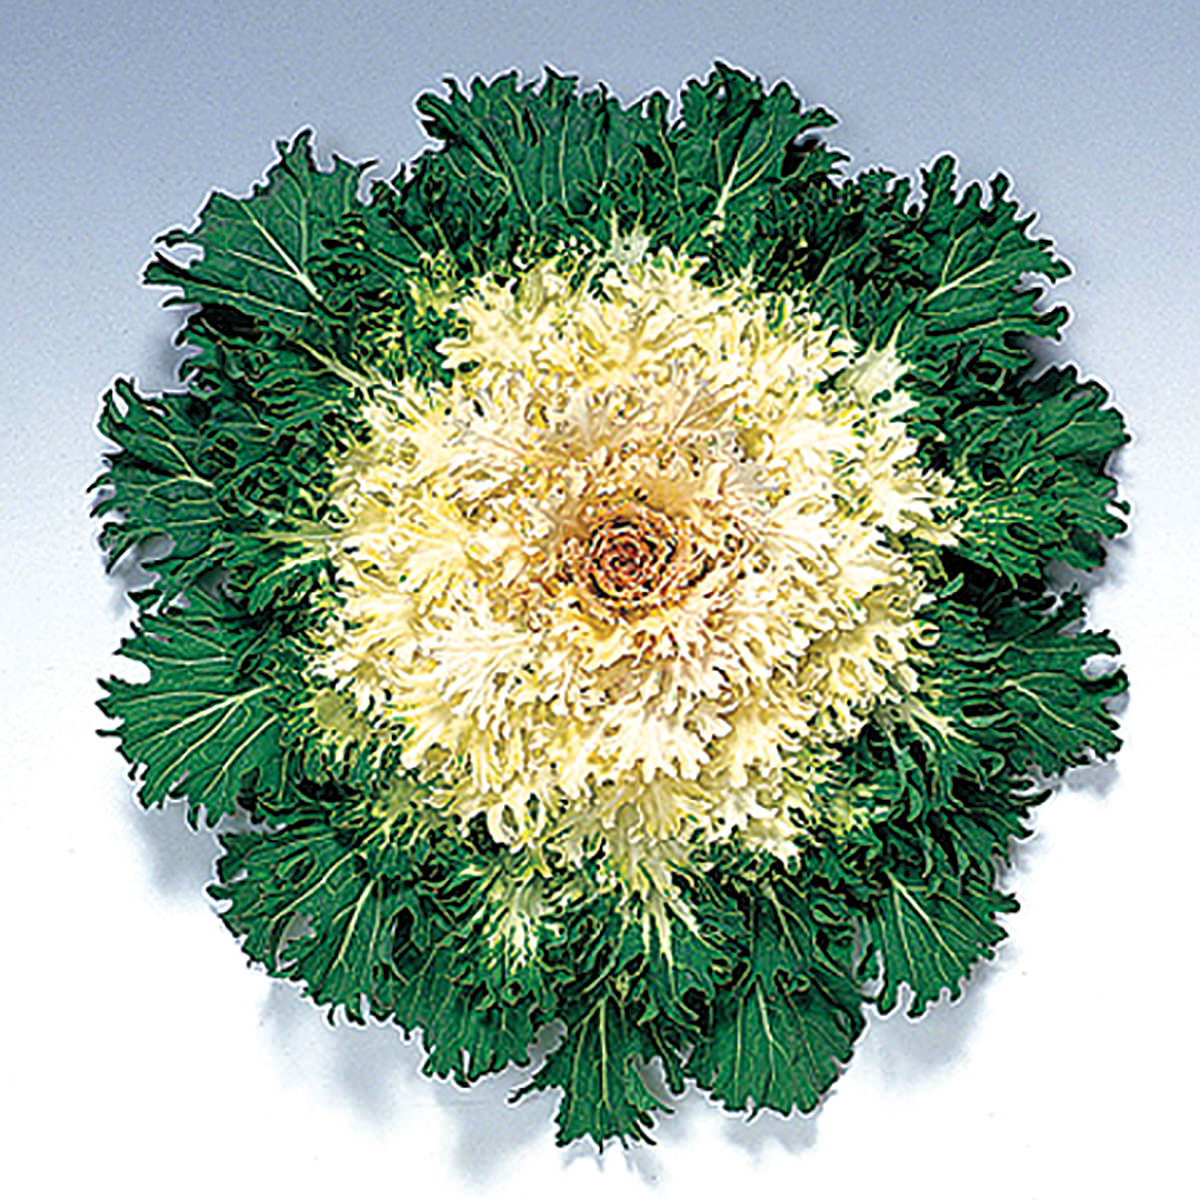 Coral Prince Ornamental Flowering Cabbage/Kale Seeds